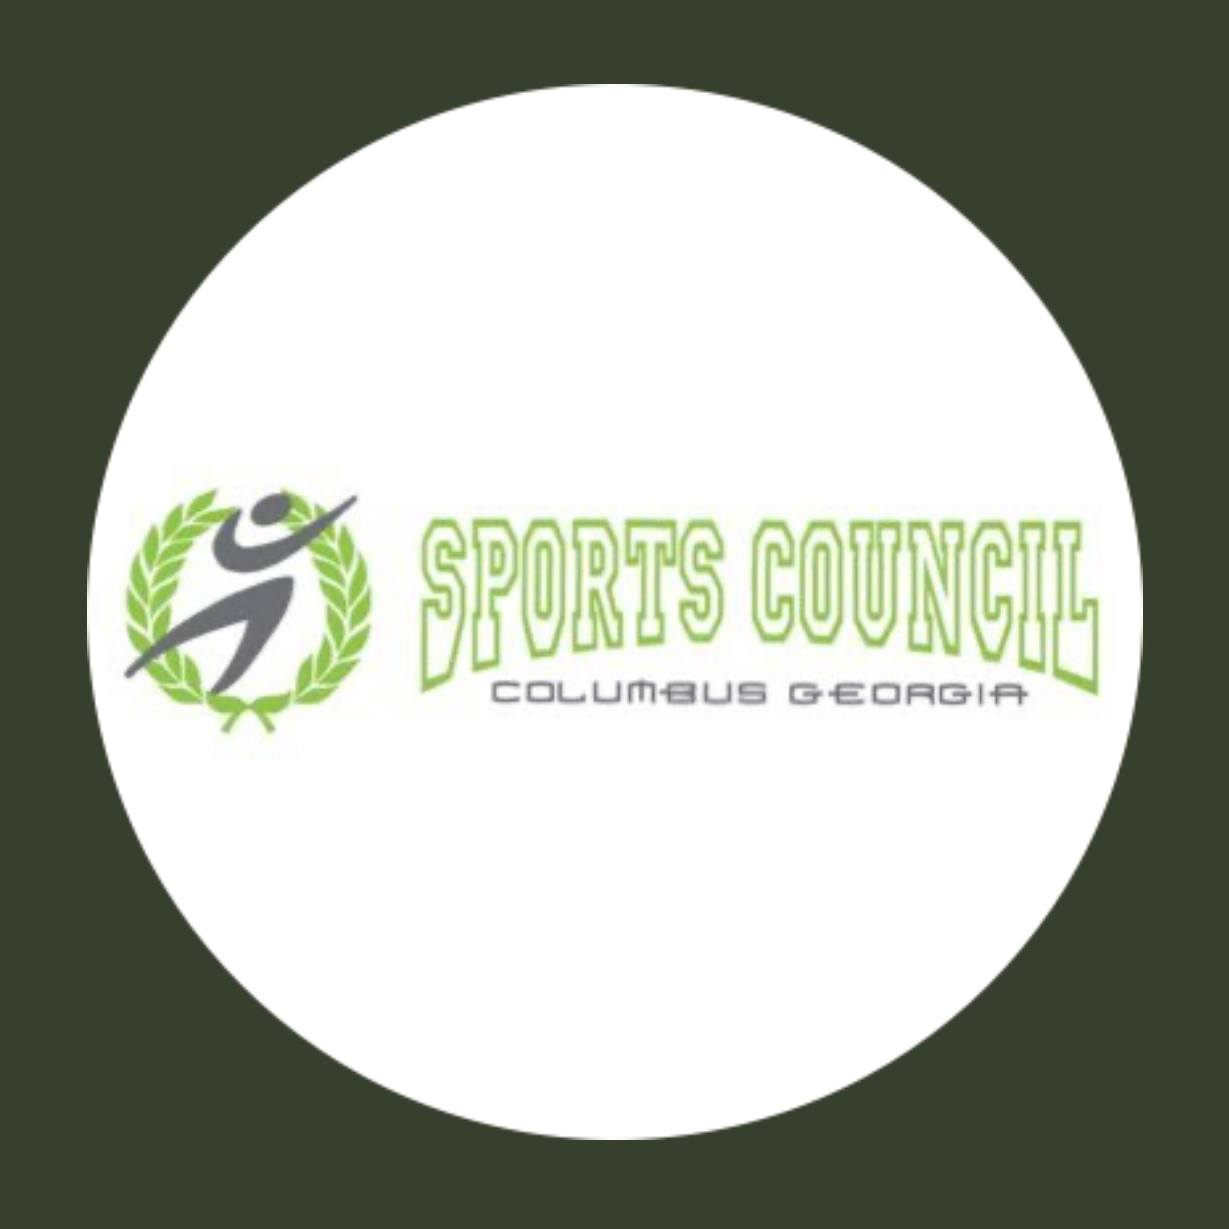 Columbus Georgia Sports Council